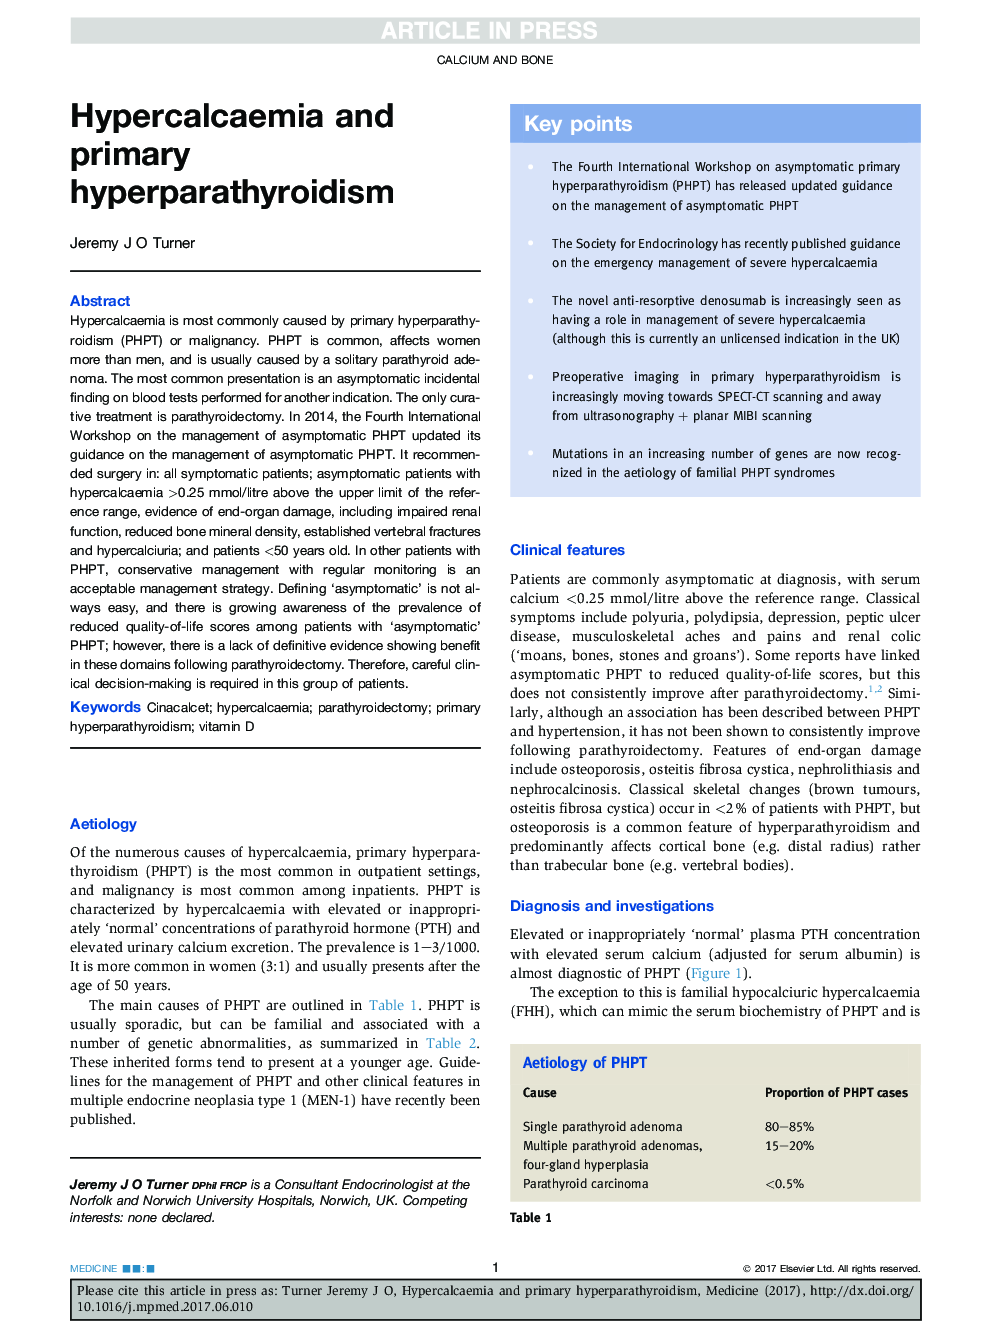 Hypercalcaemia and primary hyperparathyroidism